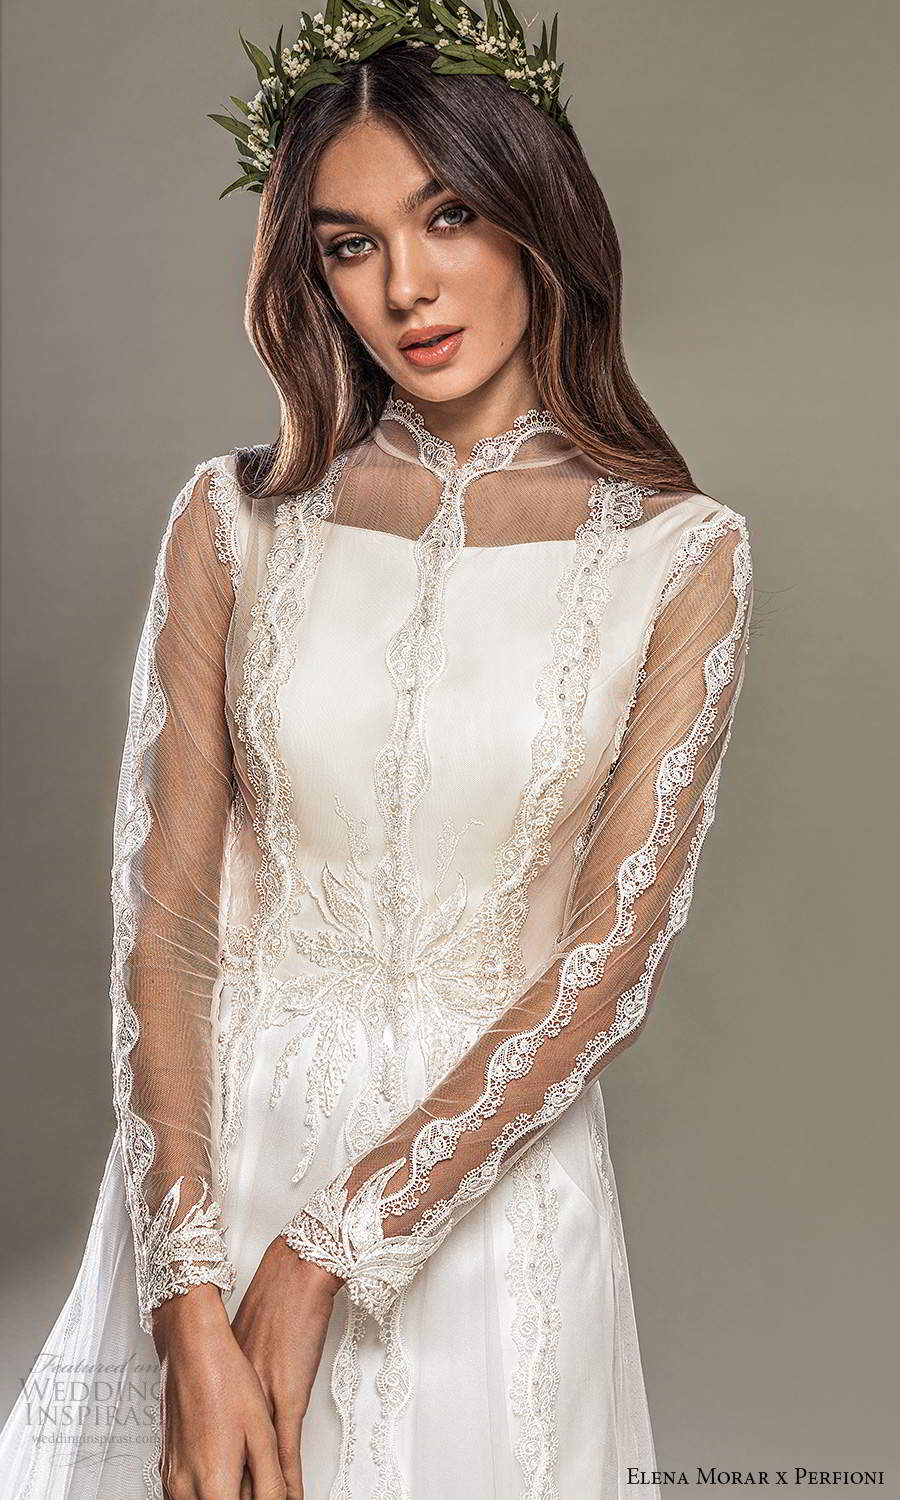 elena morar perfioni 2021 bridal sleeveless bateau neckline clean minimalist sheath wedding dress chapel train sheer long sleeves high neckline top (32) mv